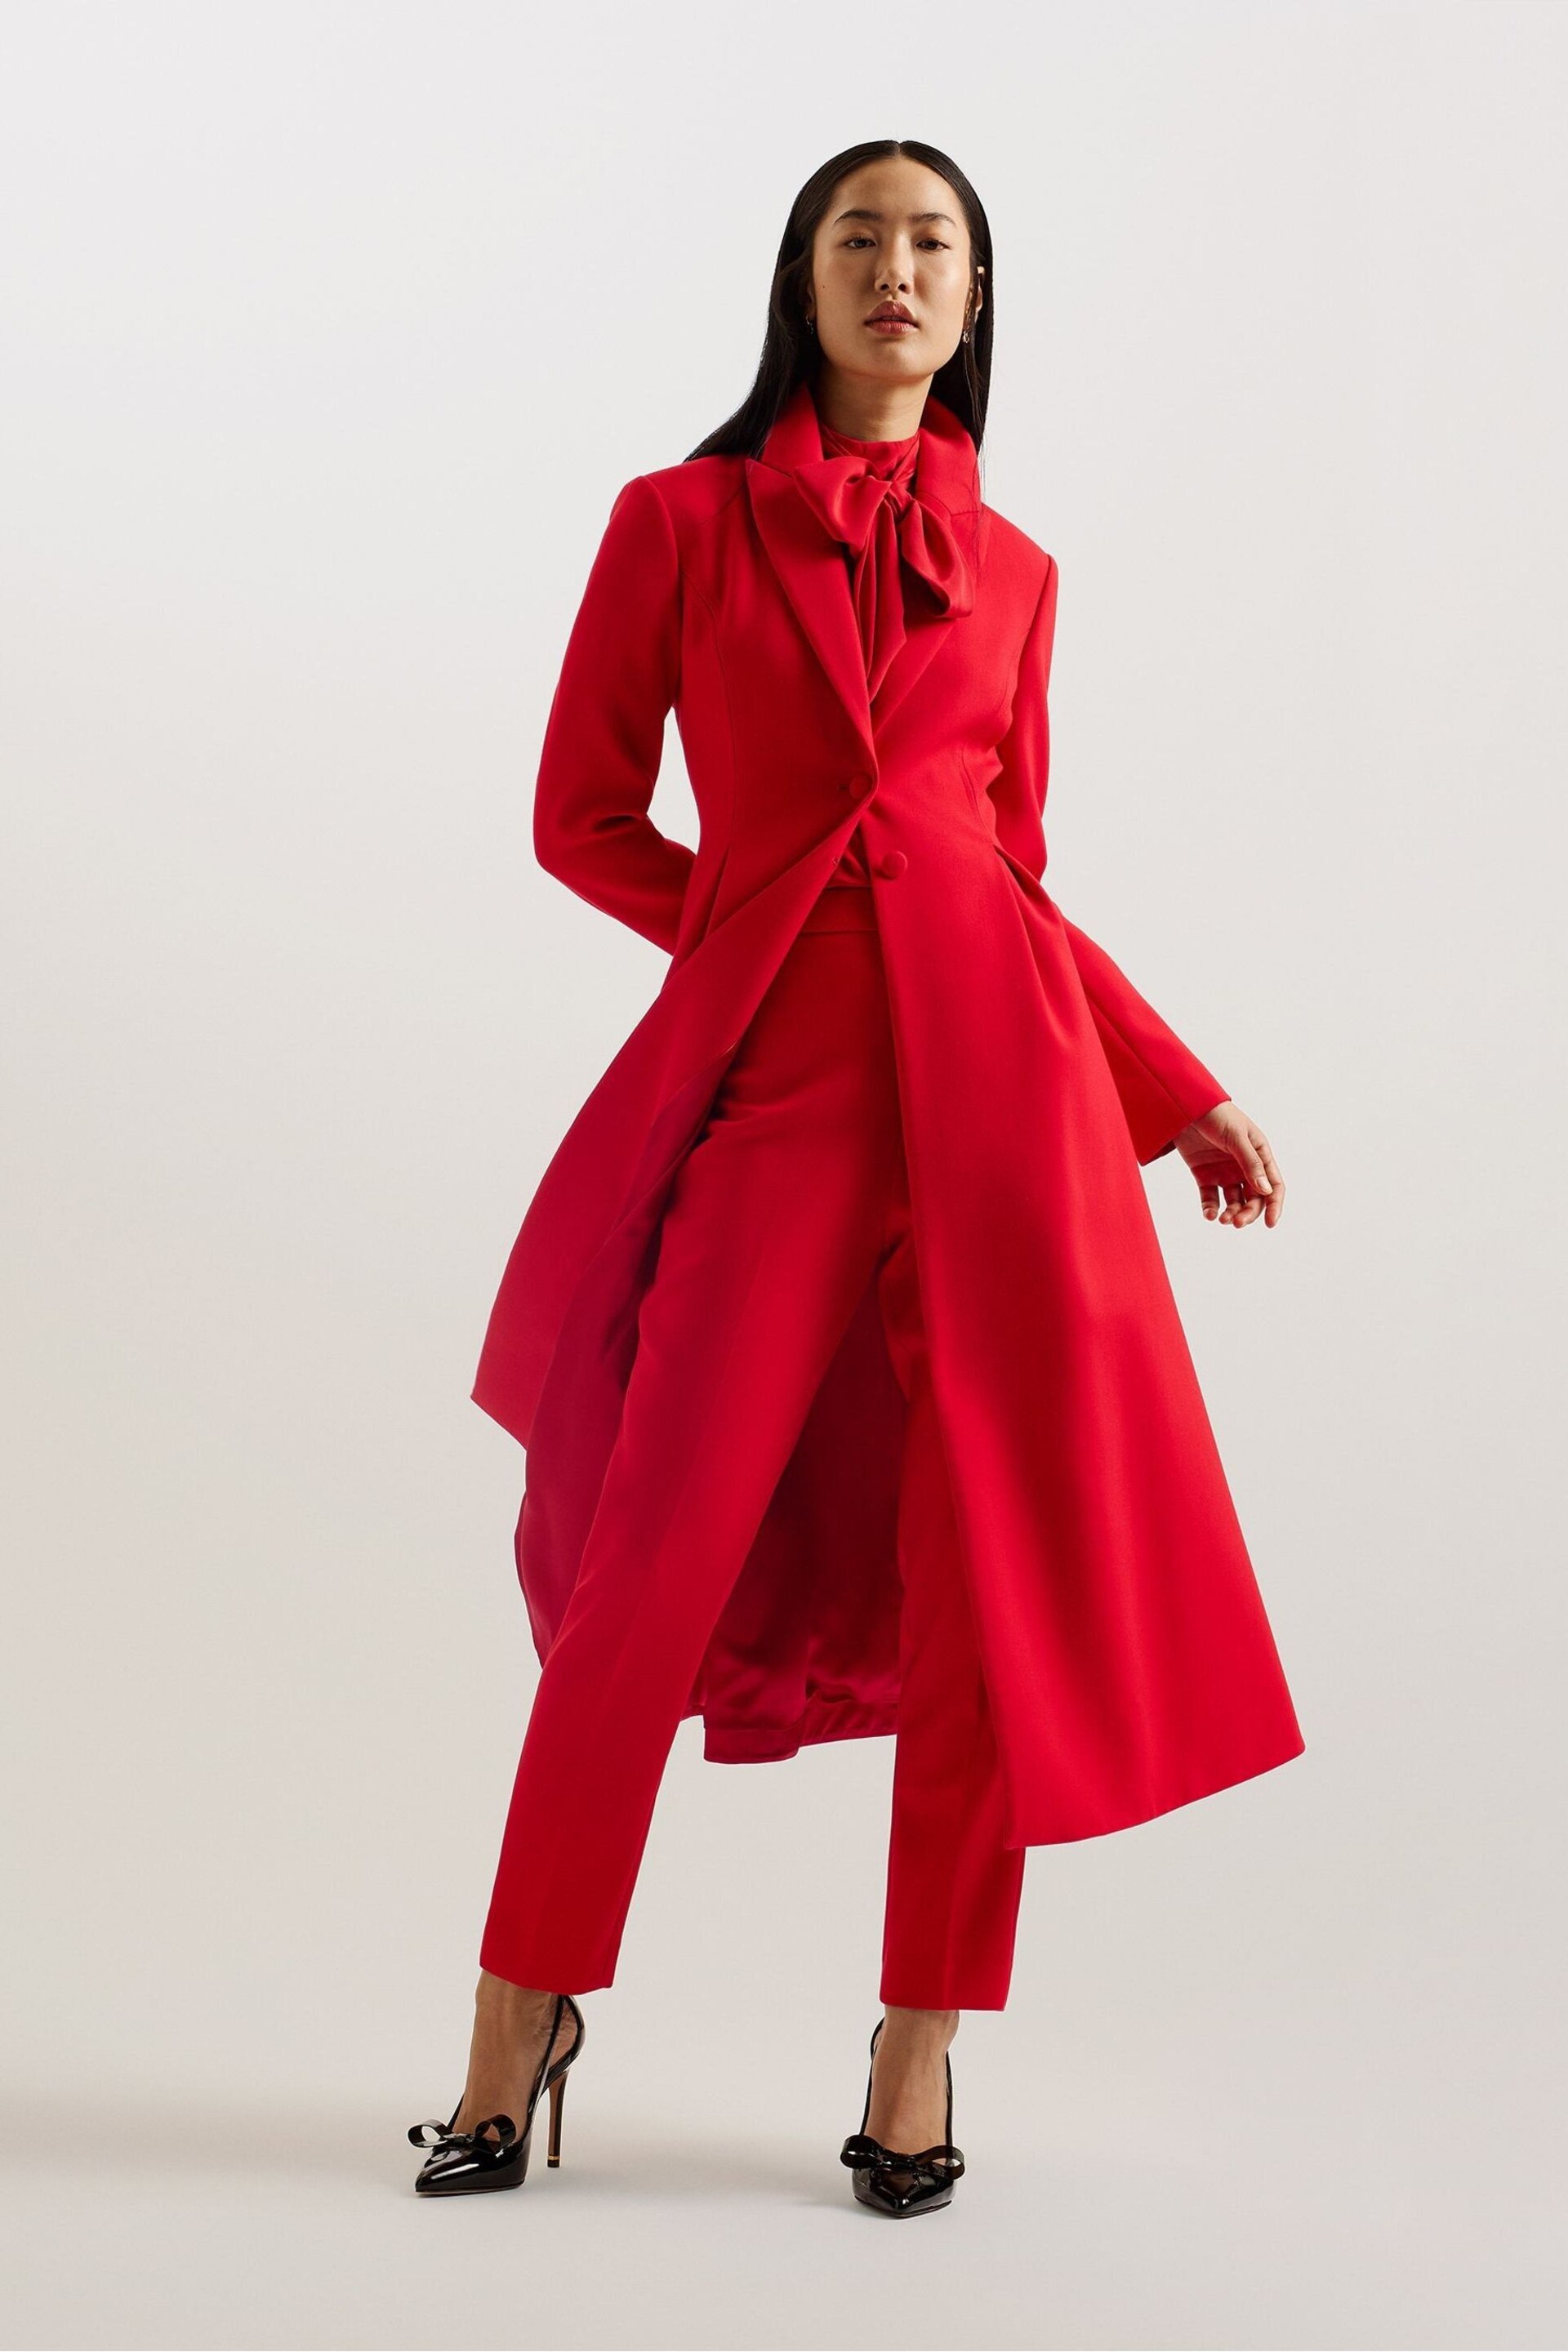 Ted Baker Red Sarela Dress Coat - Image 1 of 6